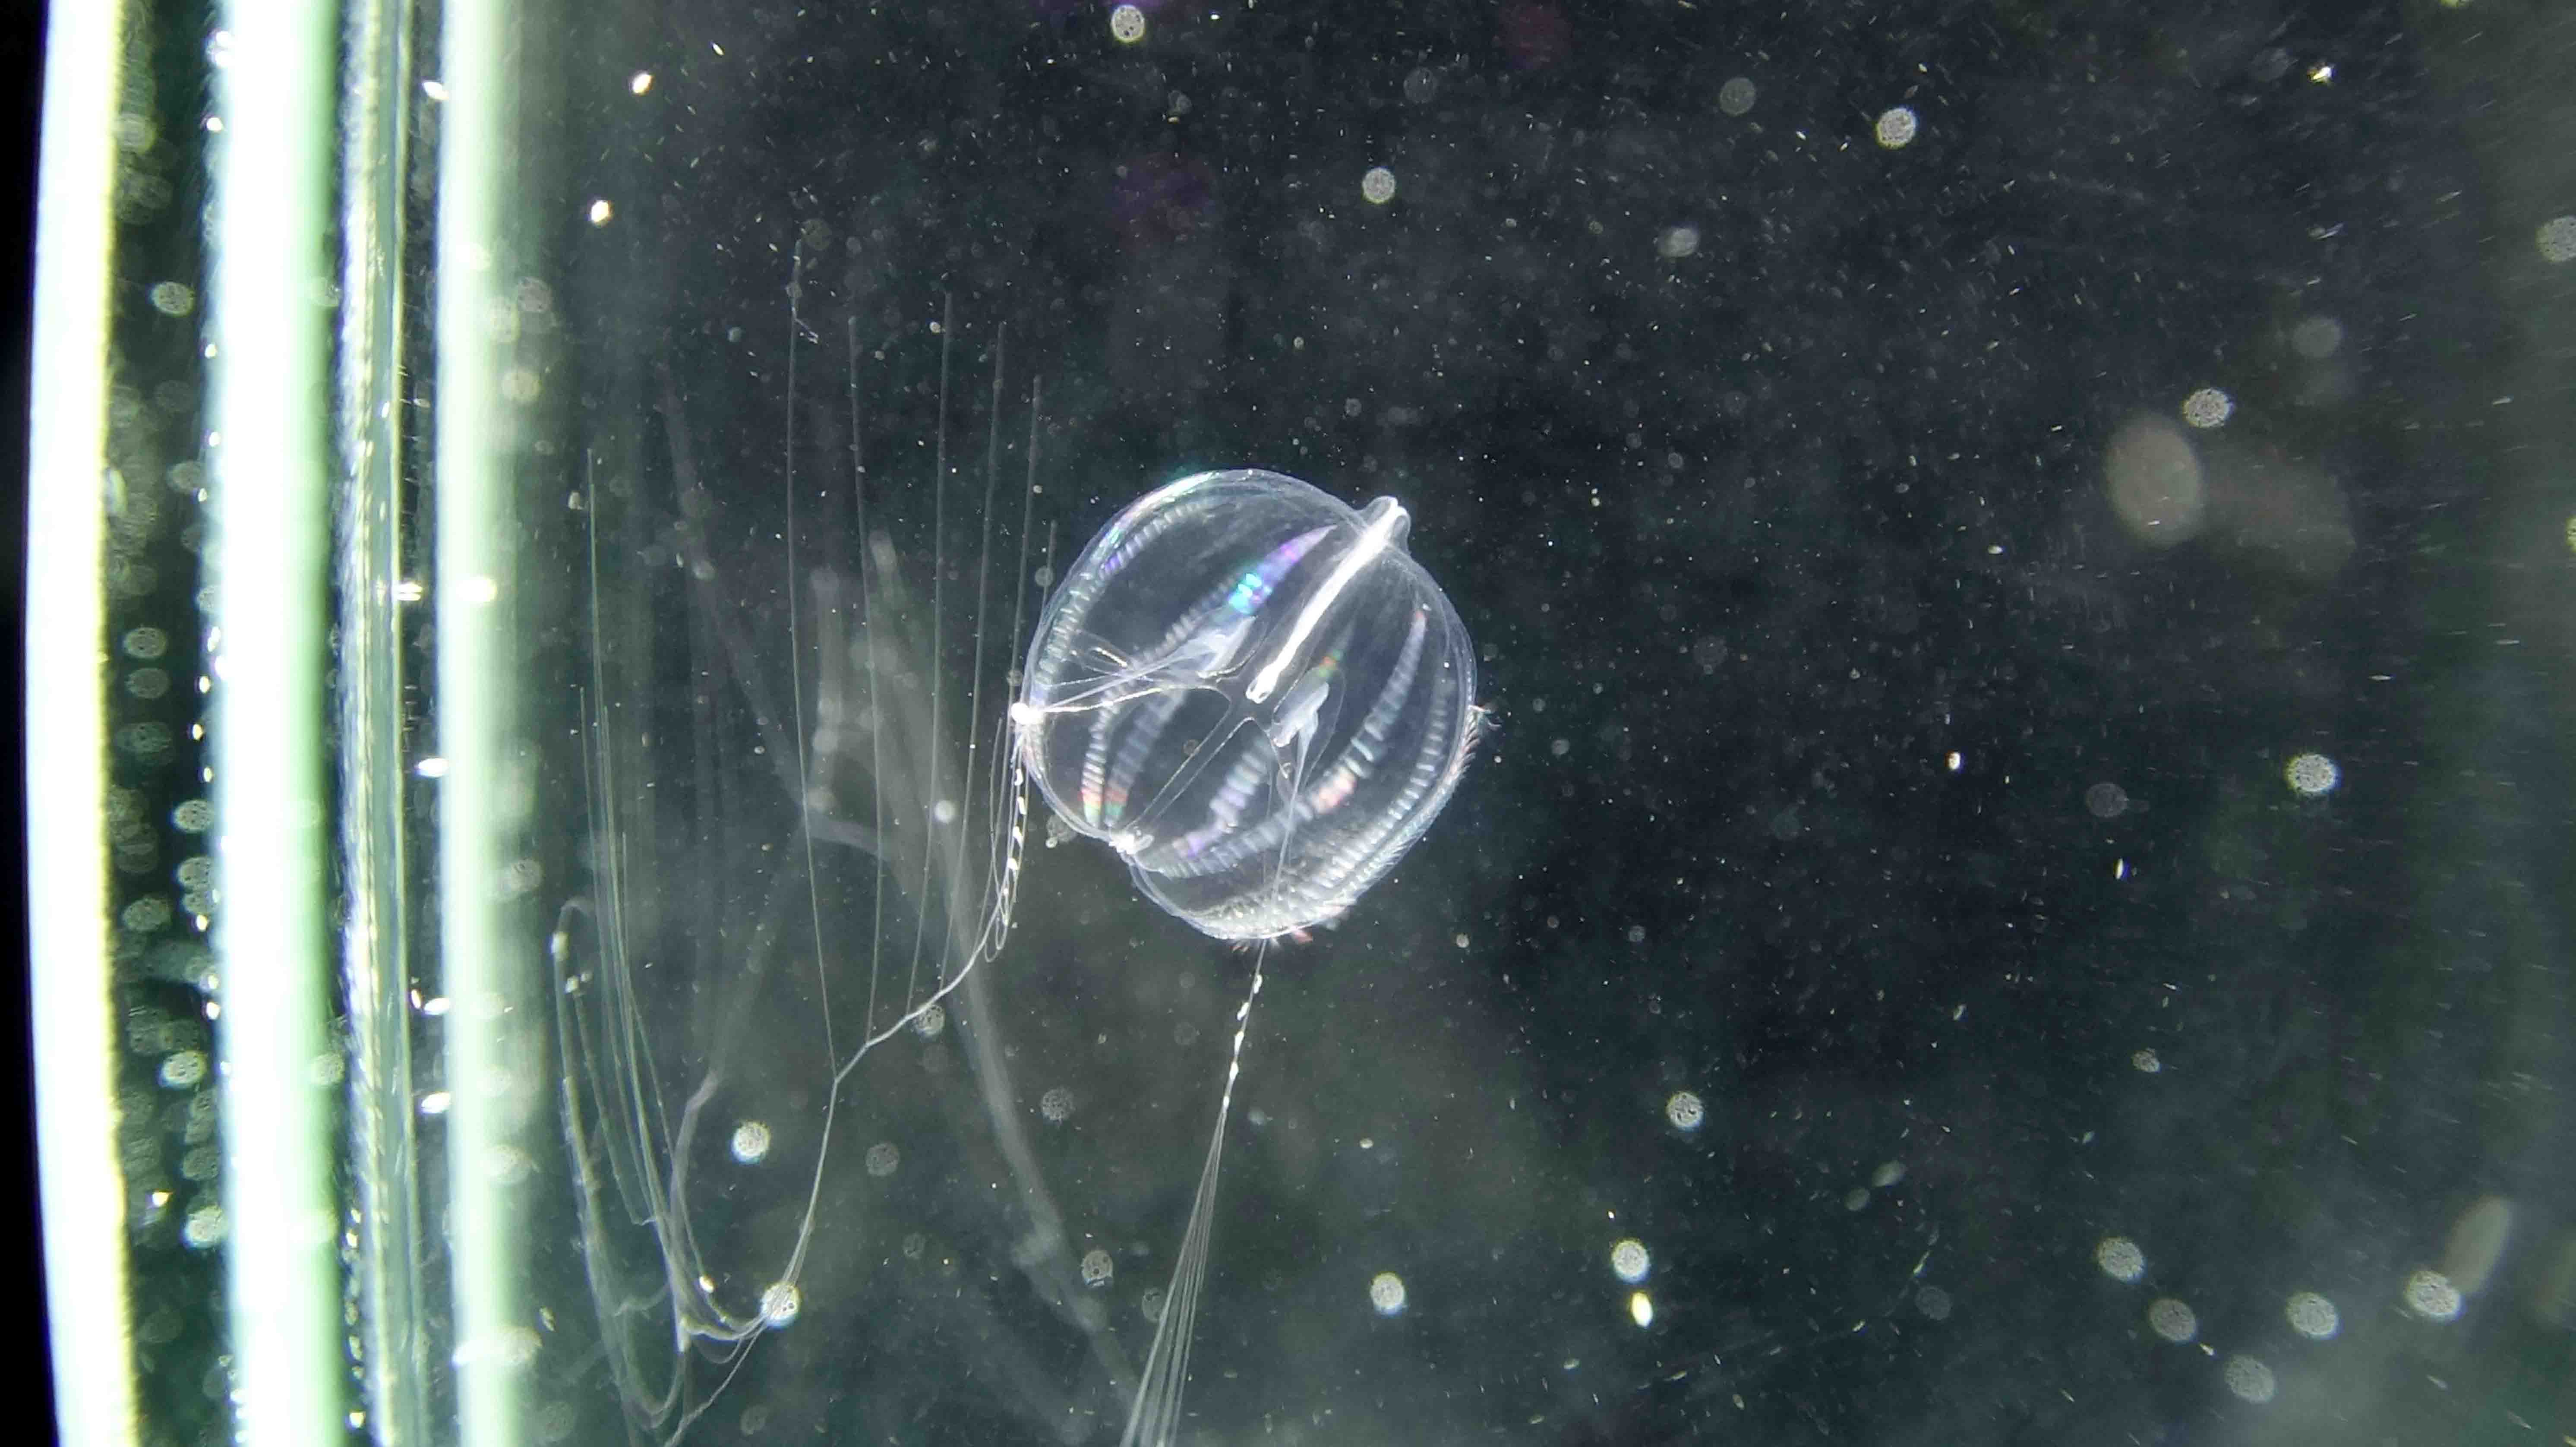 close up photo of the Pleurobranchia brachei zooplankton swimming in water.